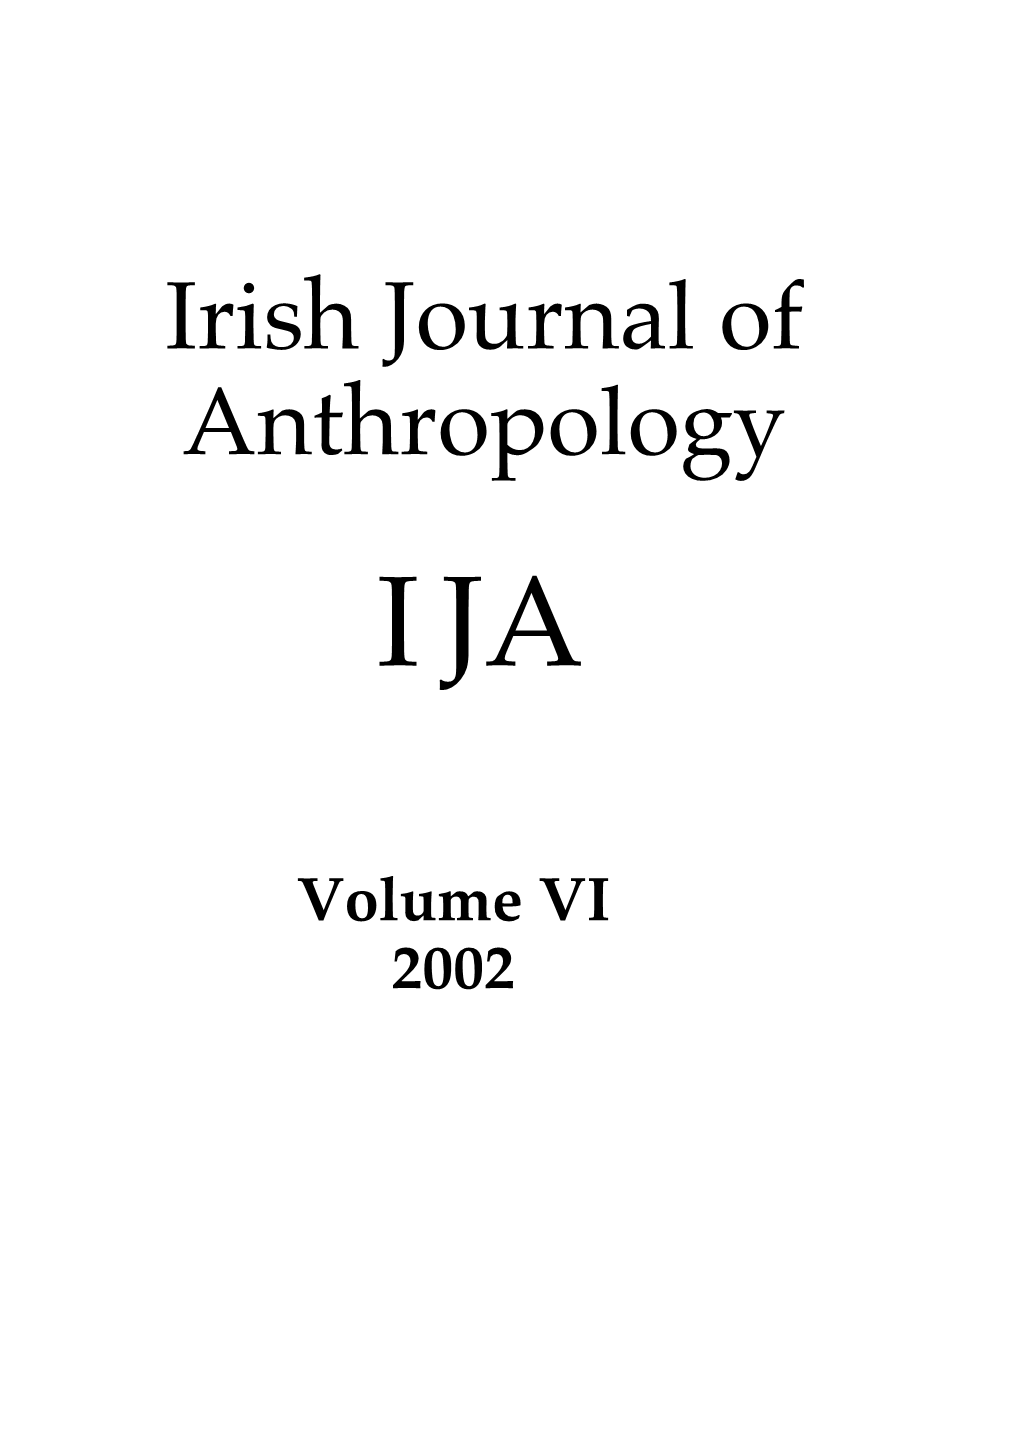 Irish Journal of Anthropology I JA